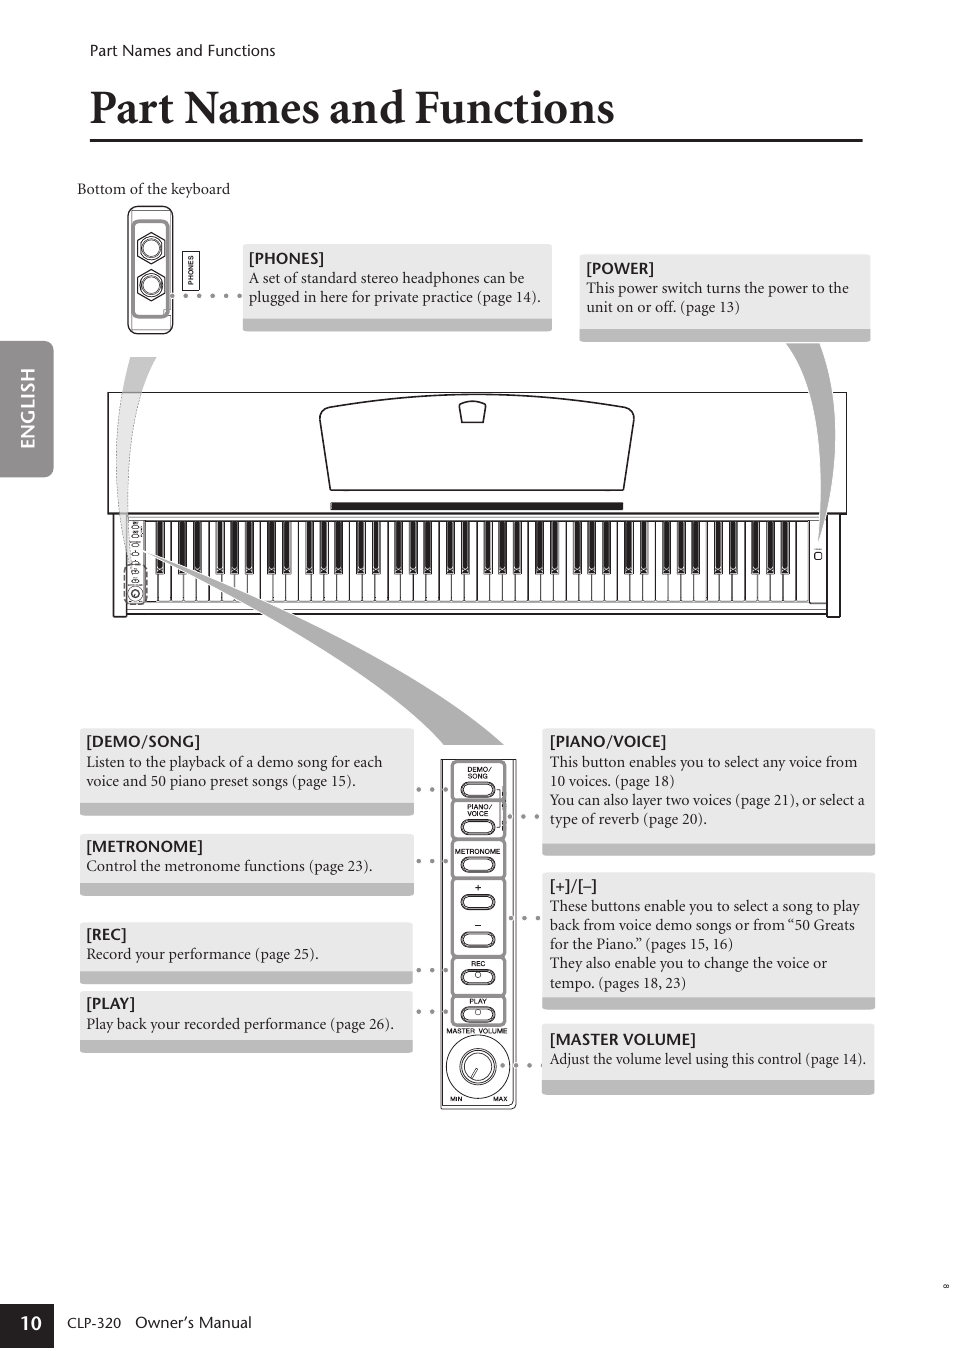 Part names and functions | Yamaha Clavinova CLP-320 User Manual | Page